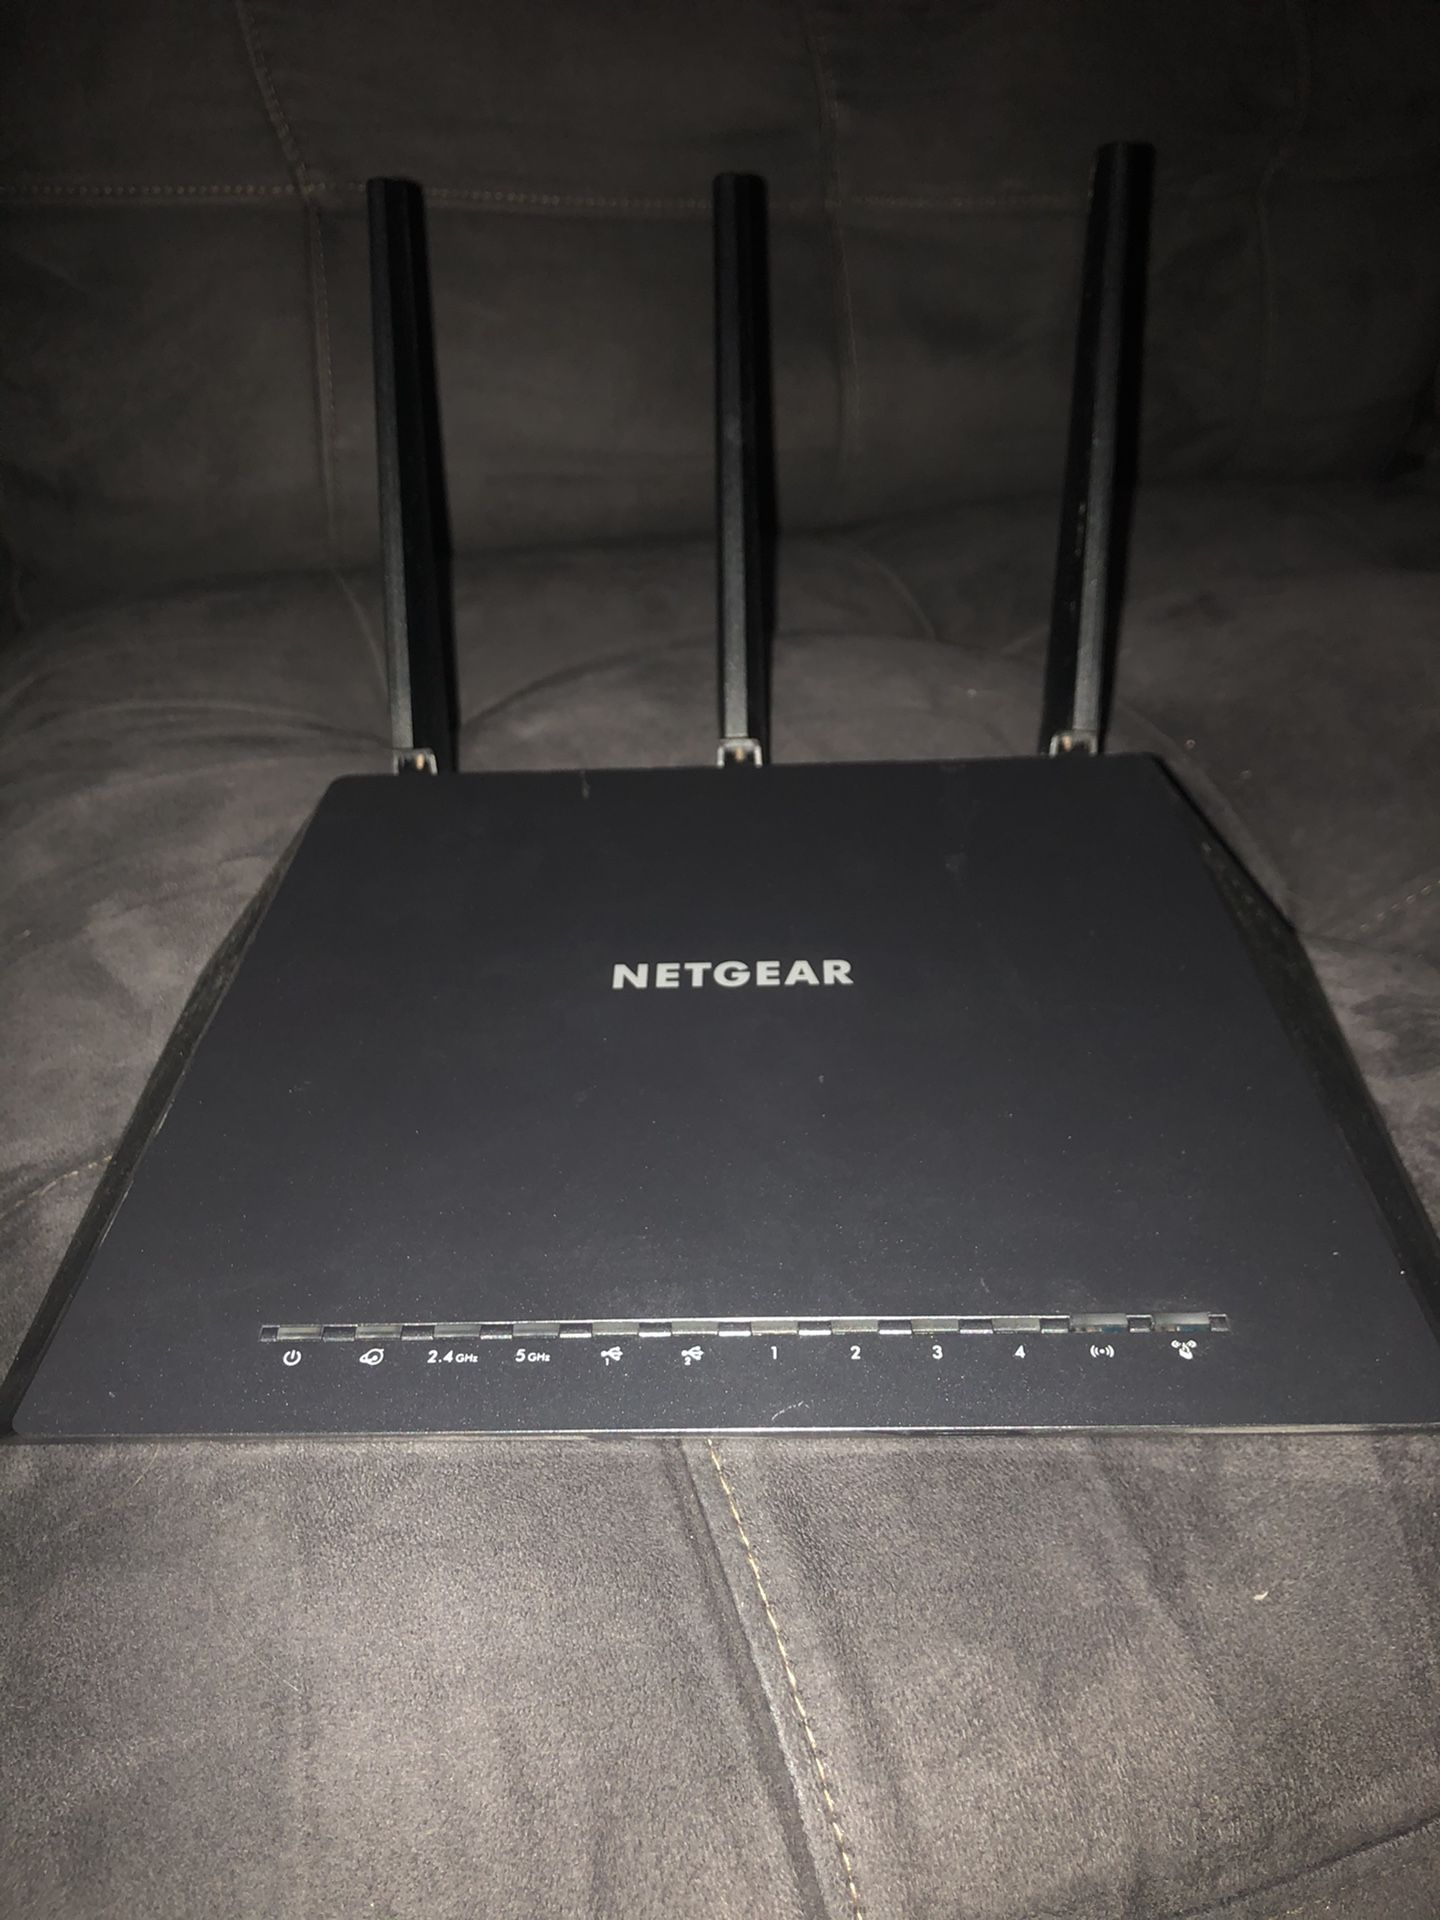 NETGEAR AC1900 NightHawk WiFi Router